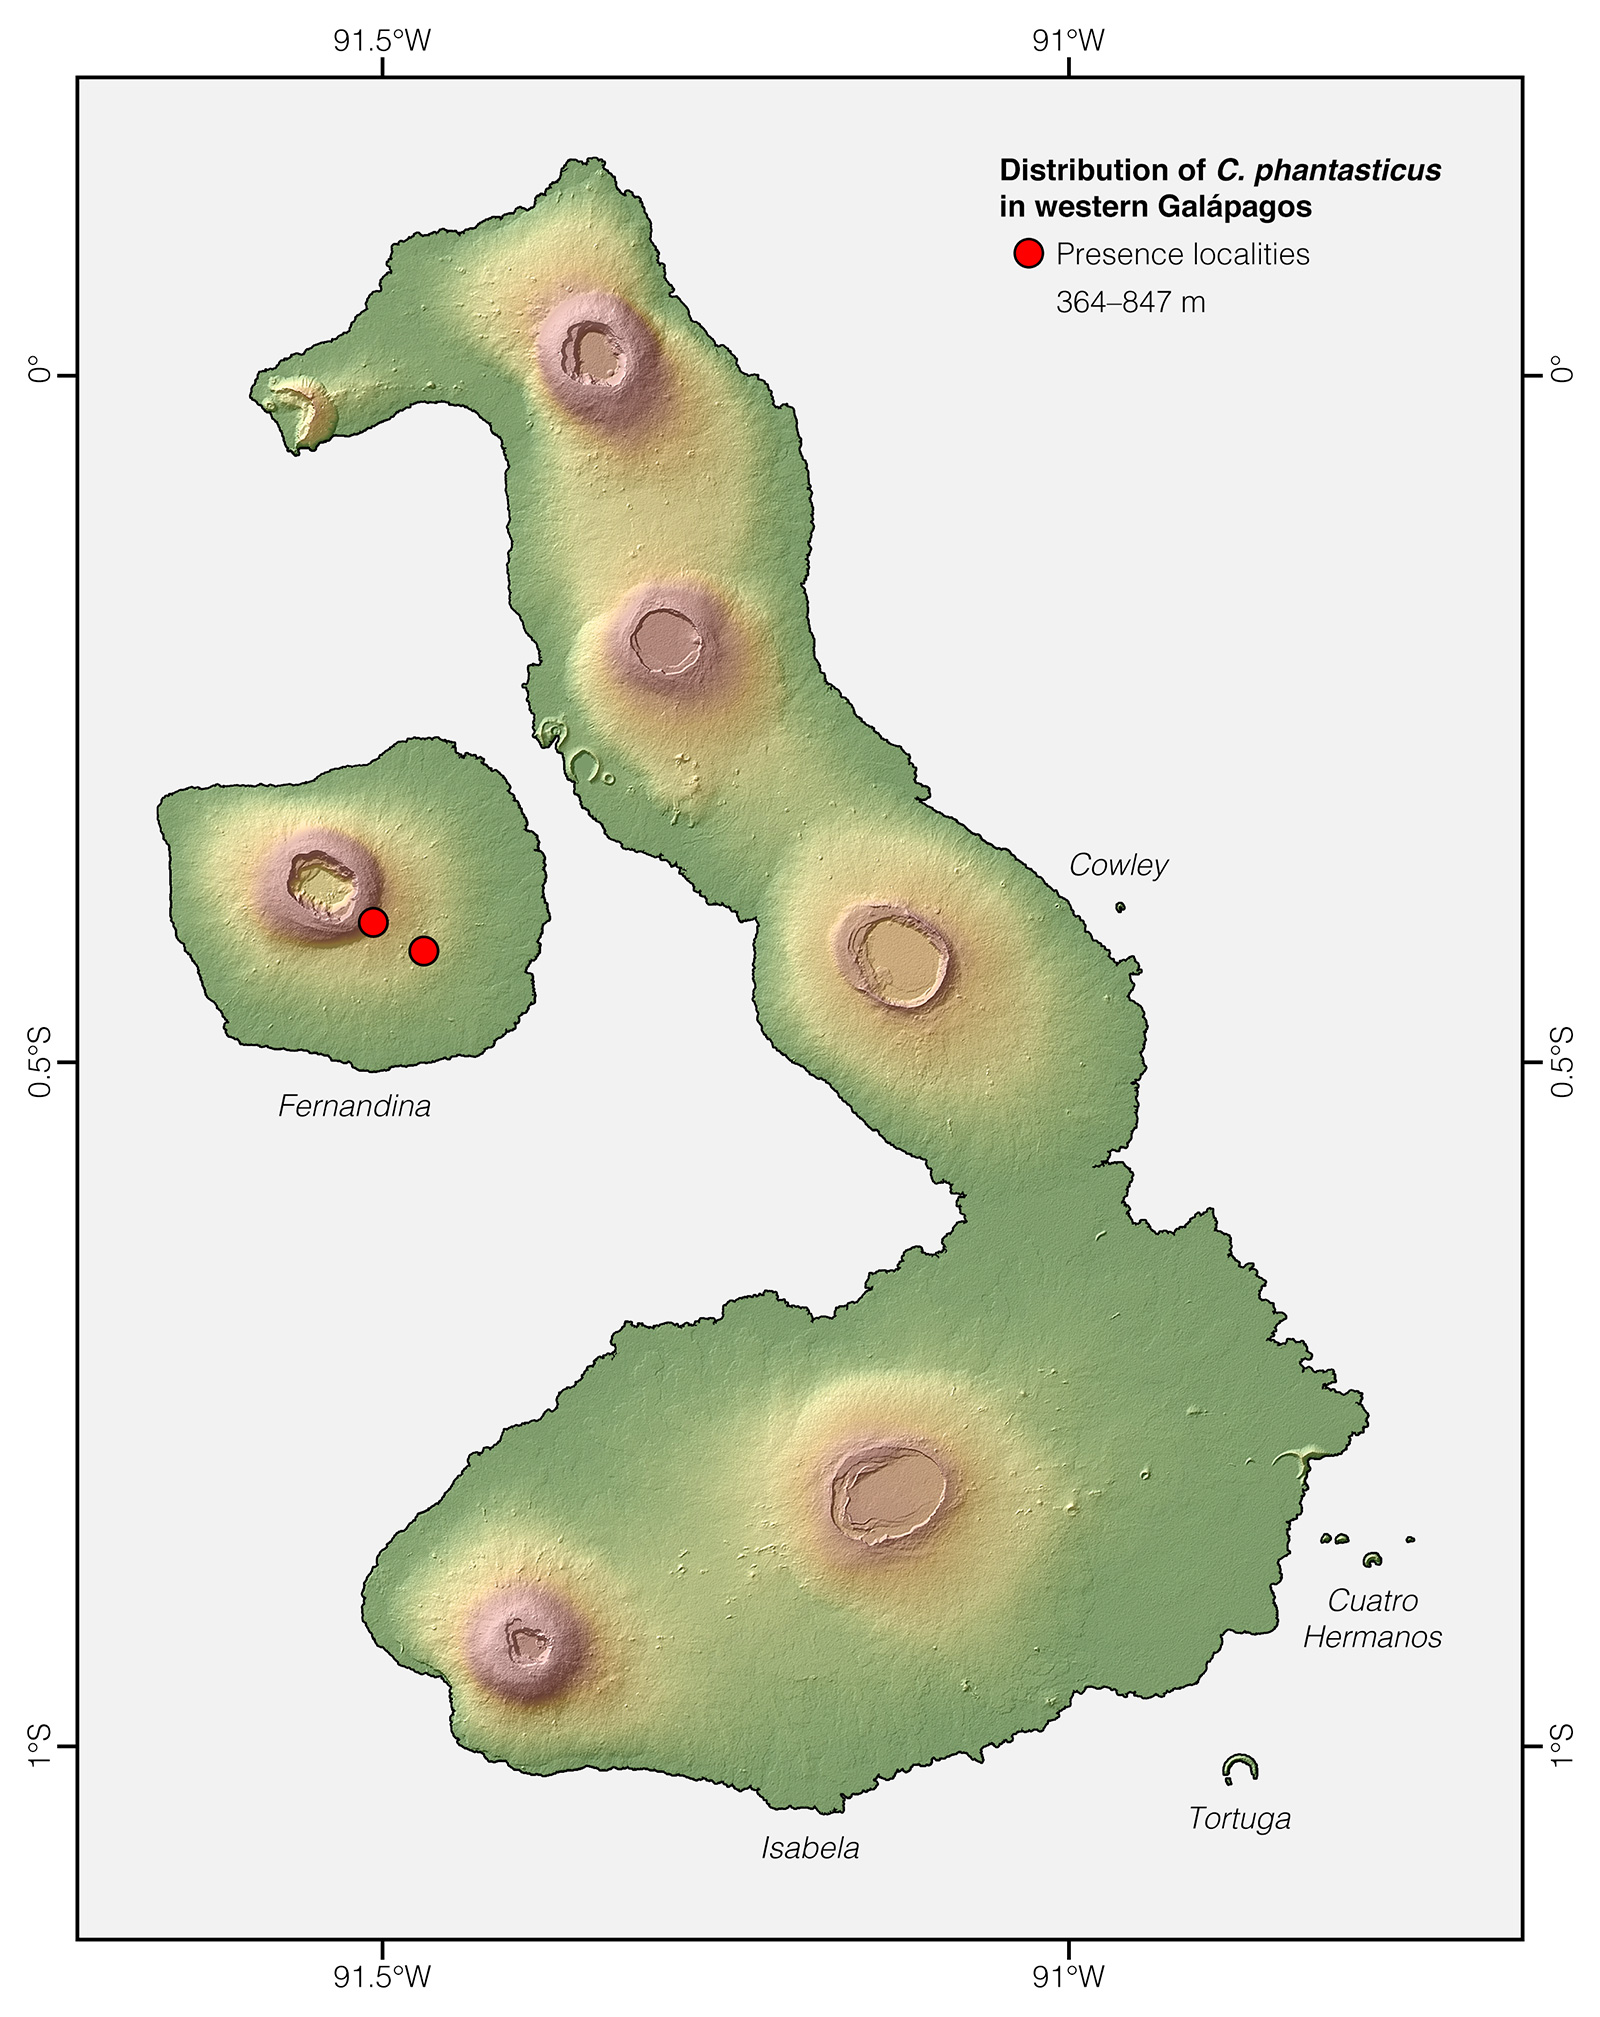 Distribution of Chelonoidis phantasticus in western Galápagos